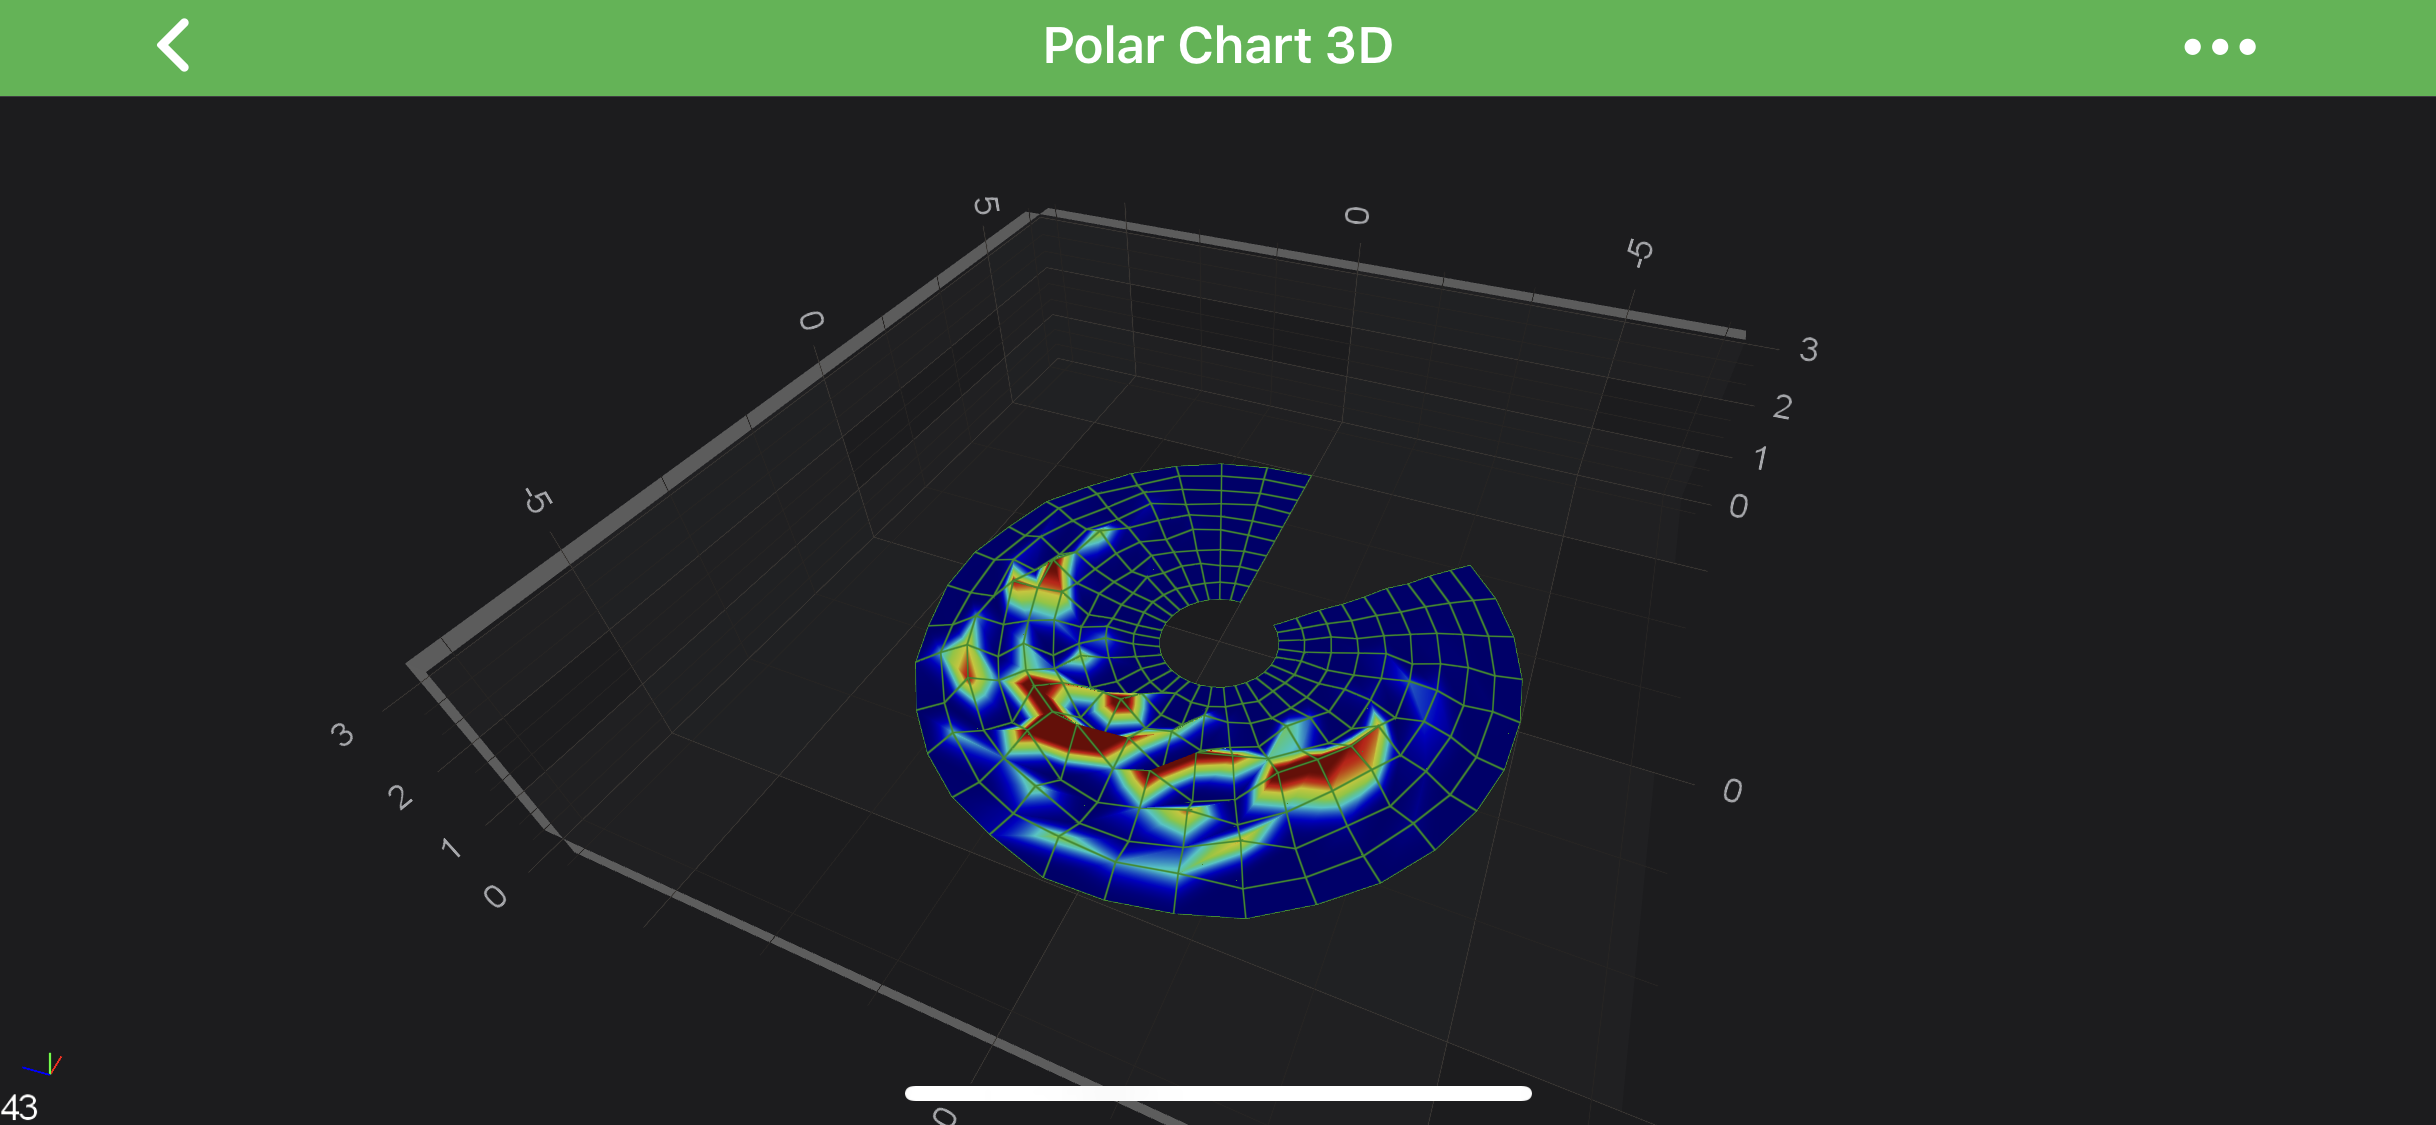 Polar Chart 3D